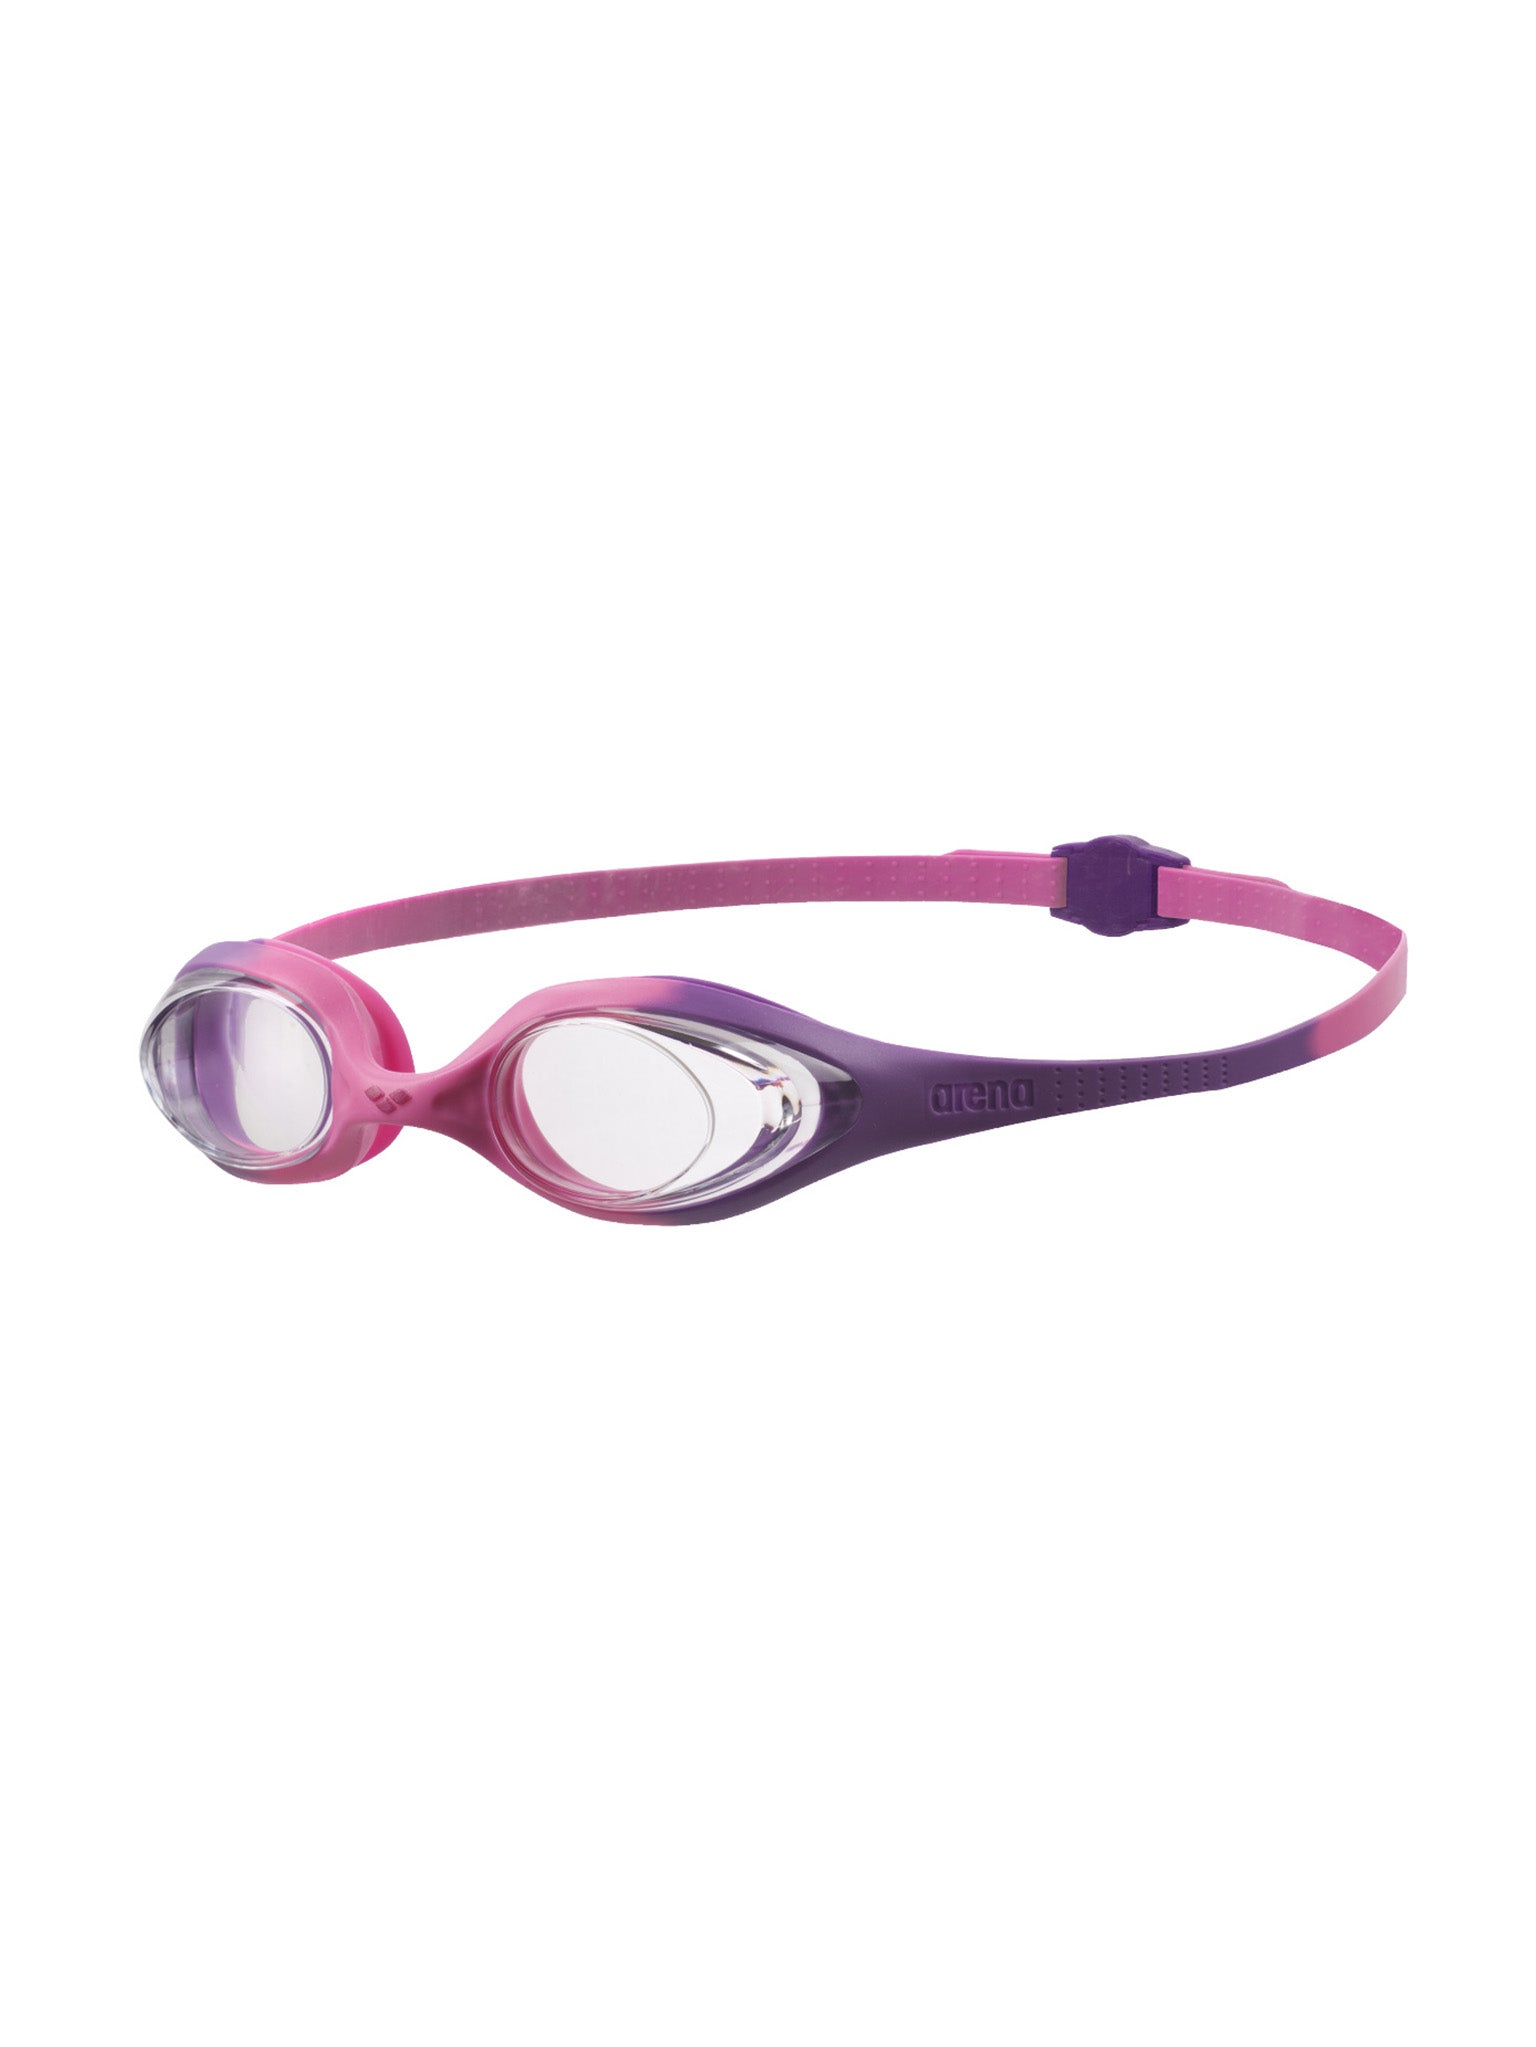 Junior Spider Swim Goggles - Purple/Pink